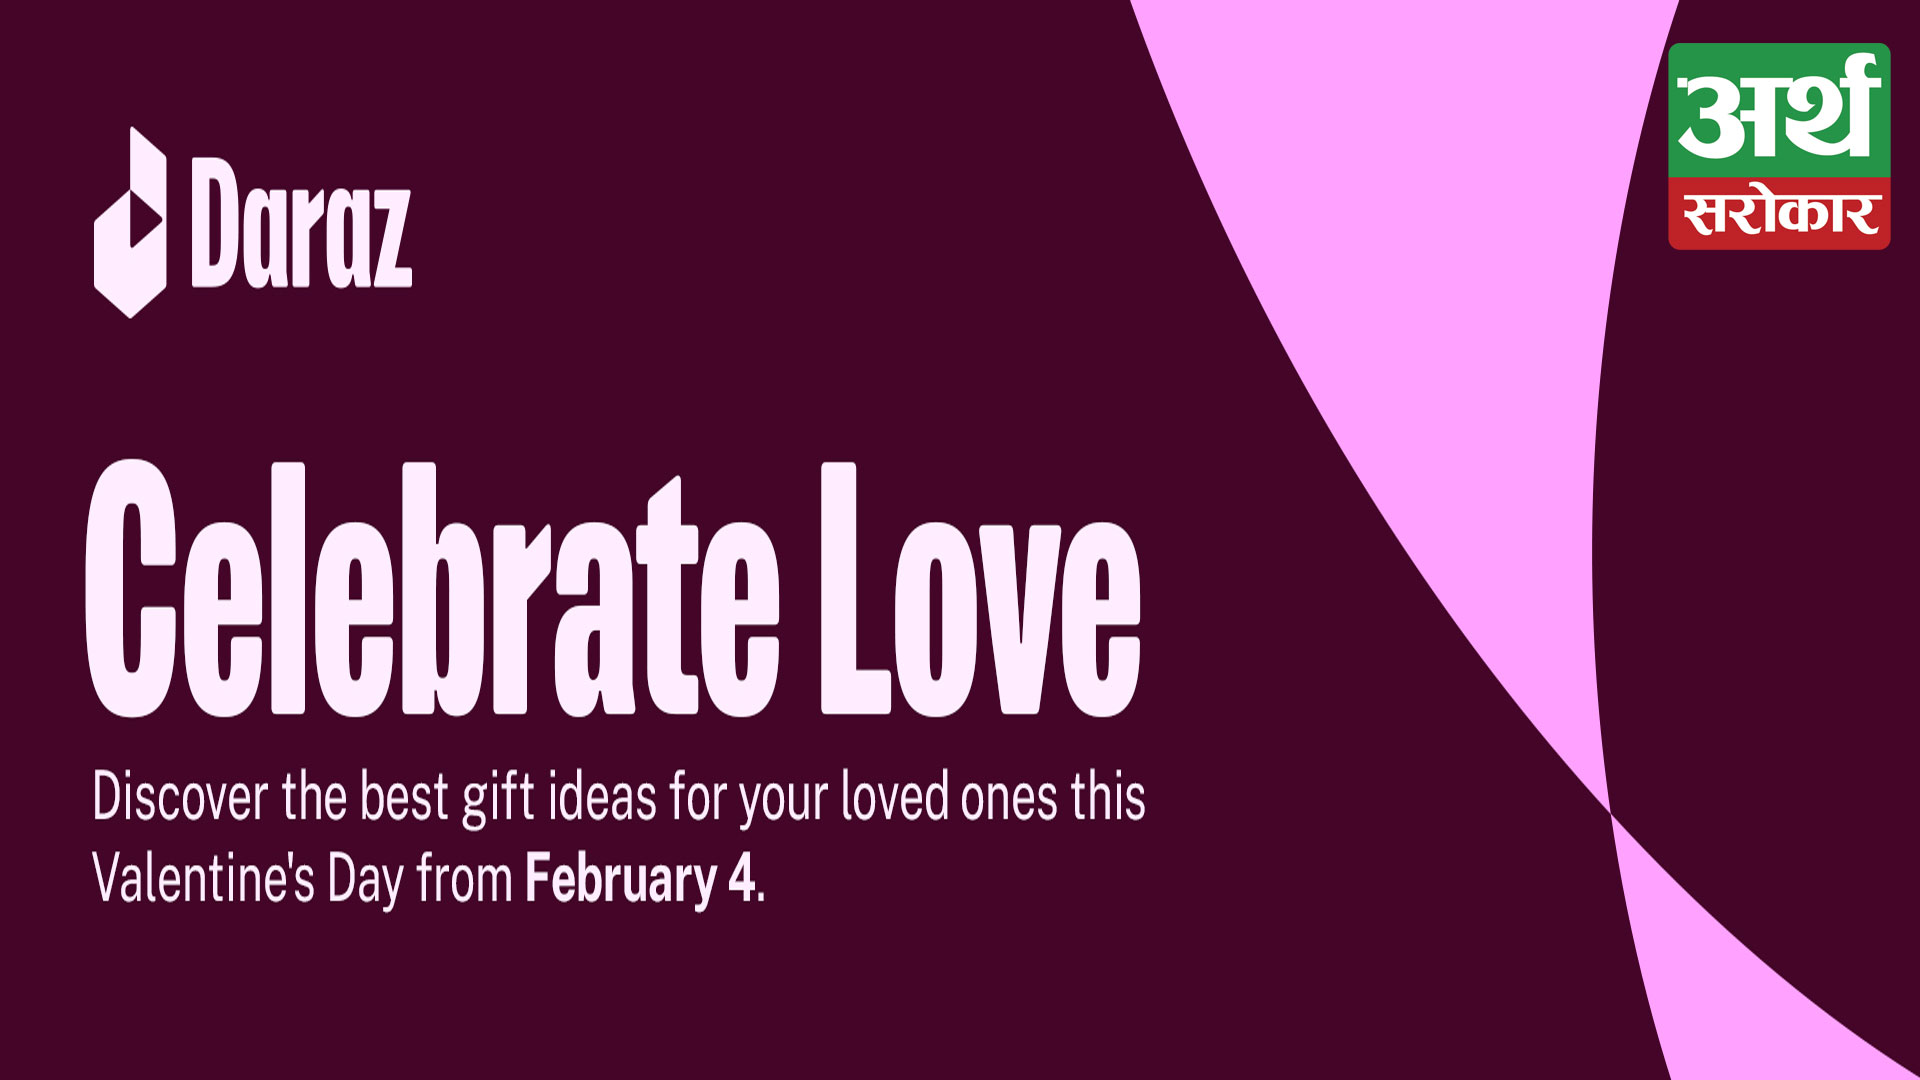 This Valentine, Celebrate Love with Daraz